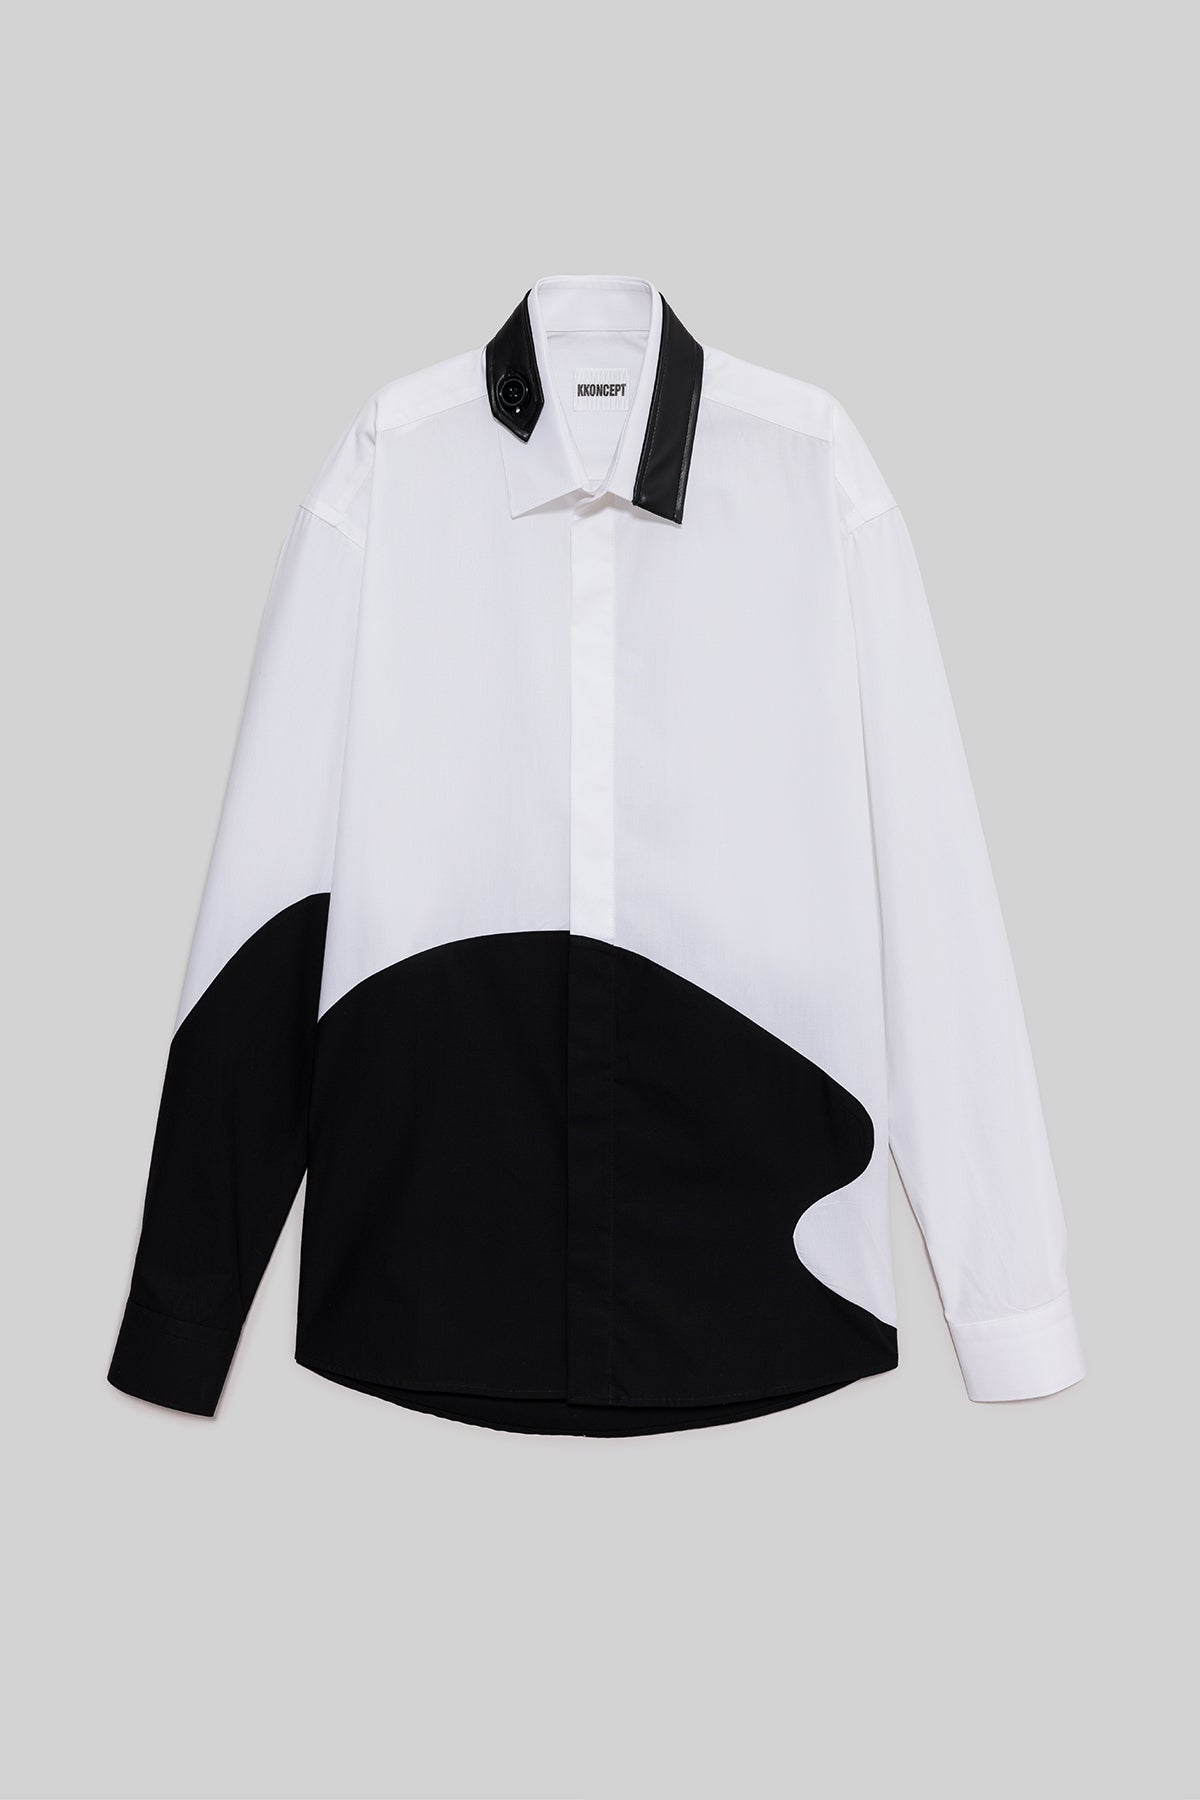 Noir Et Blanc Shirt
